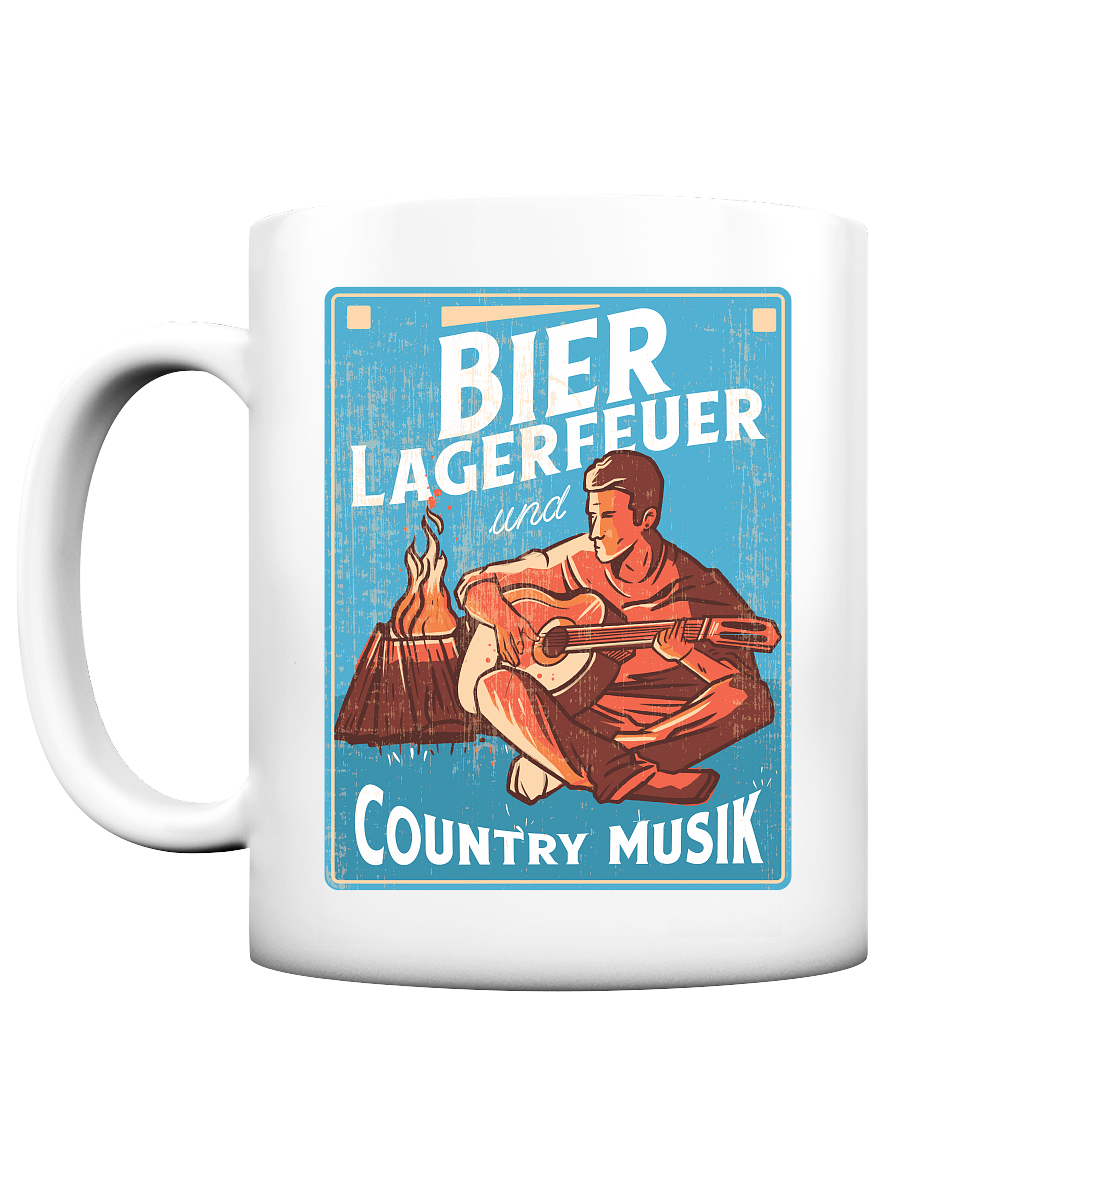 Becher - Bier, Lagerfeuer, Countrymusik - Tasse matt